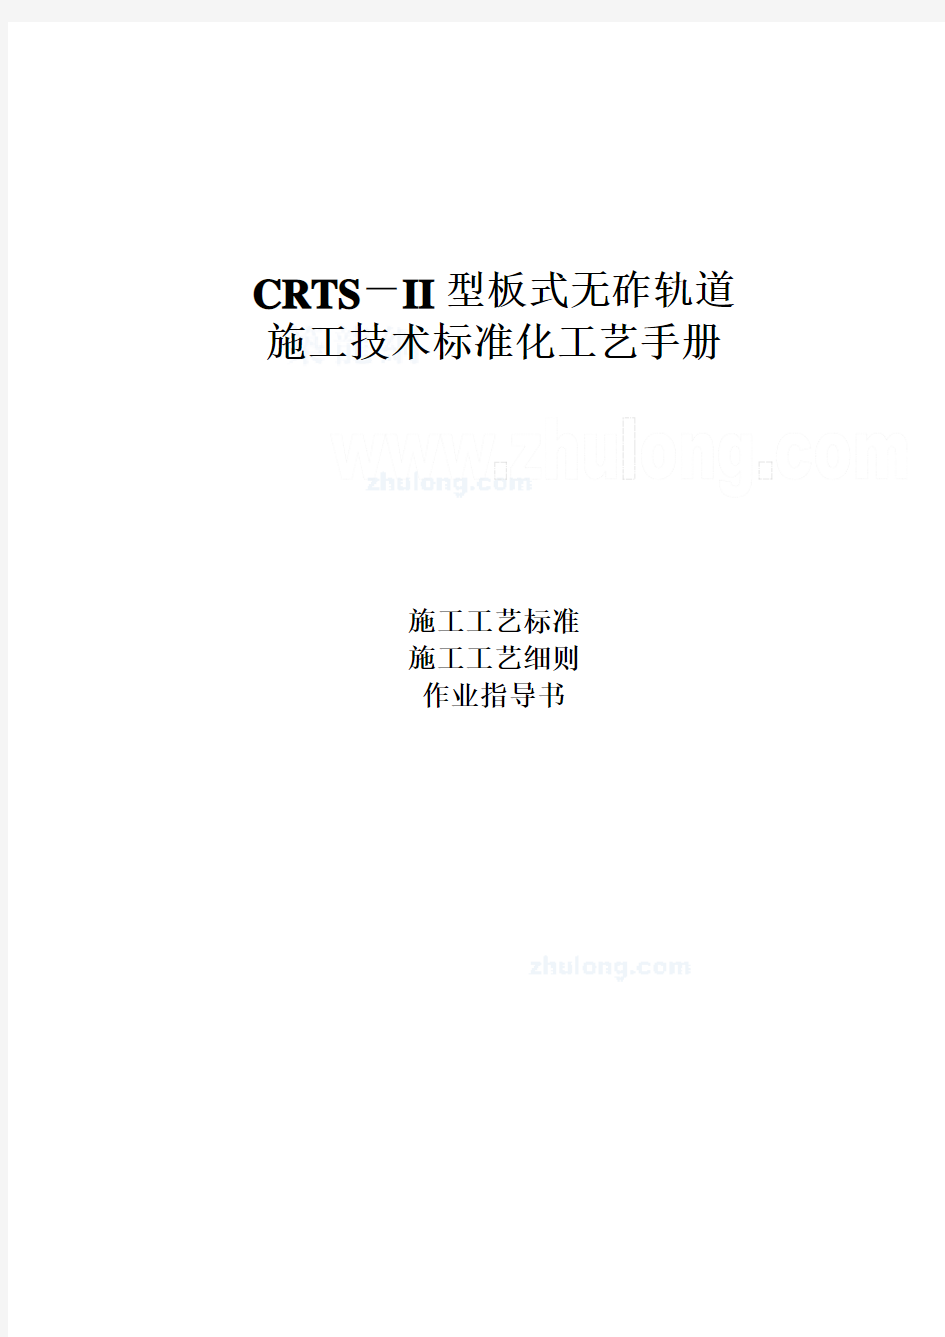 crts-ii型板式无砟轨道施工技术标准化工艺手册范本